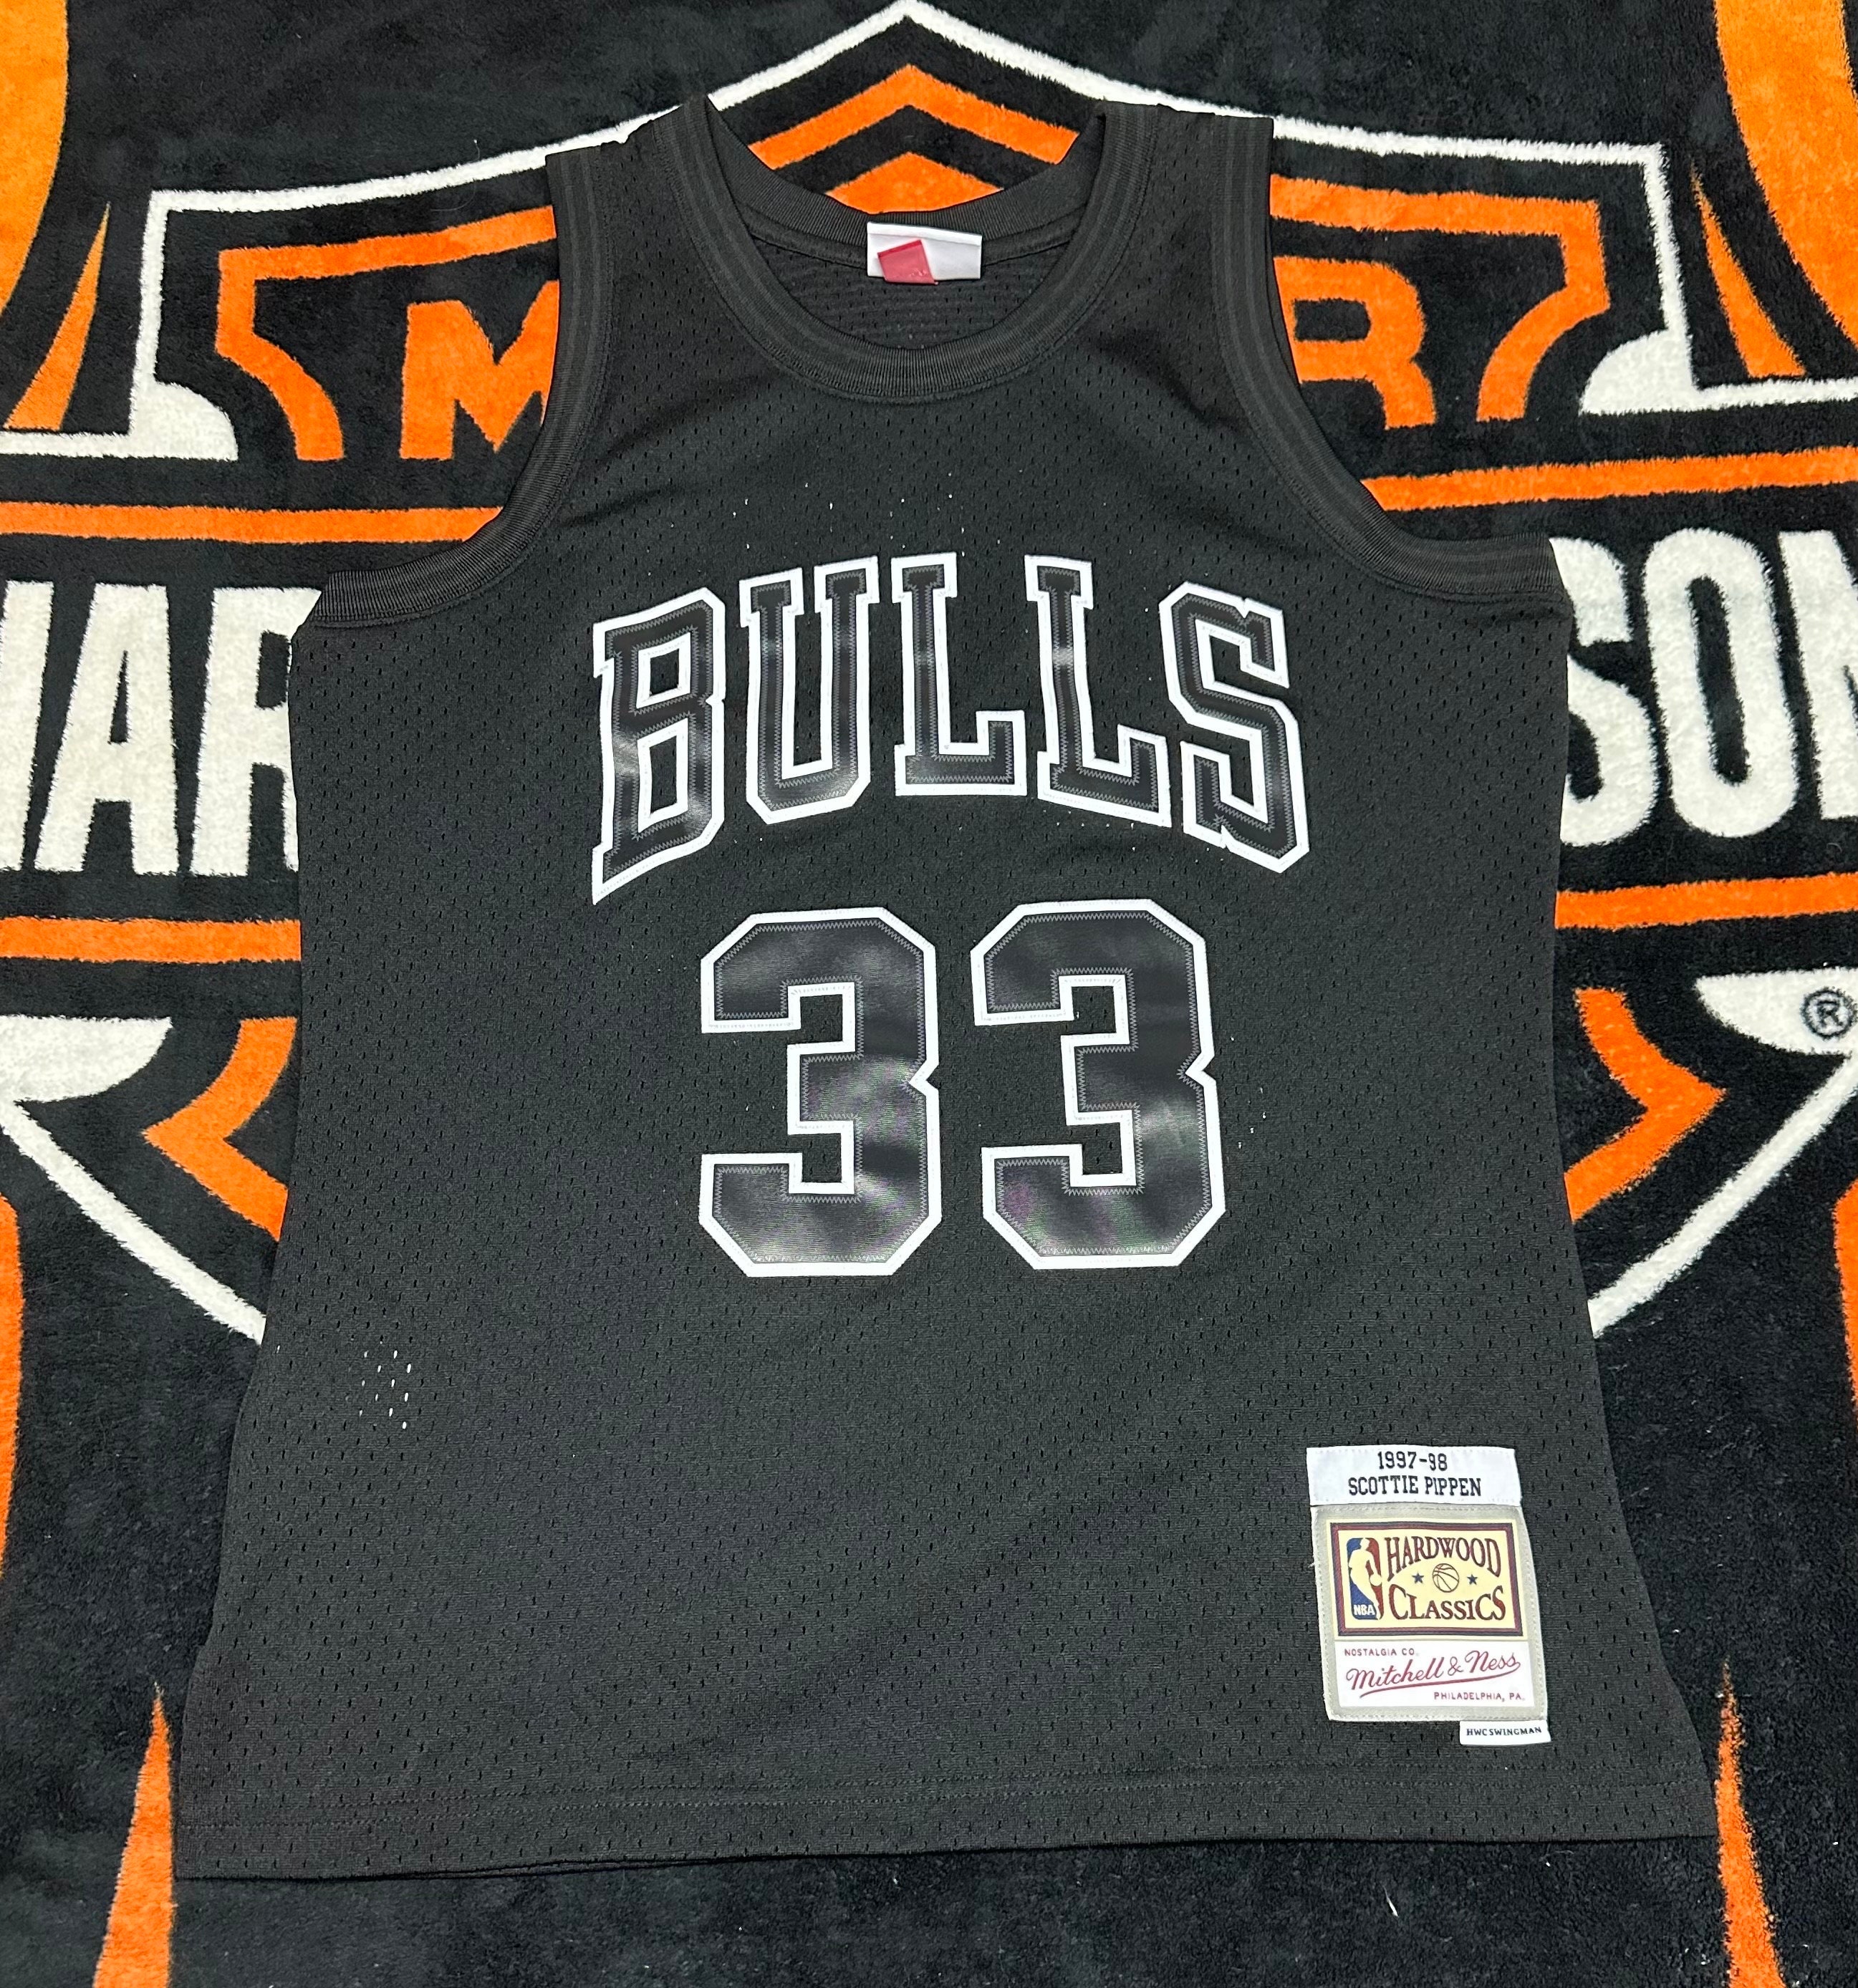 75th Anniversary Pippen#33 Bulls Flyers Black NBA Jersey